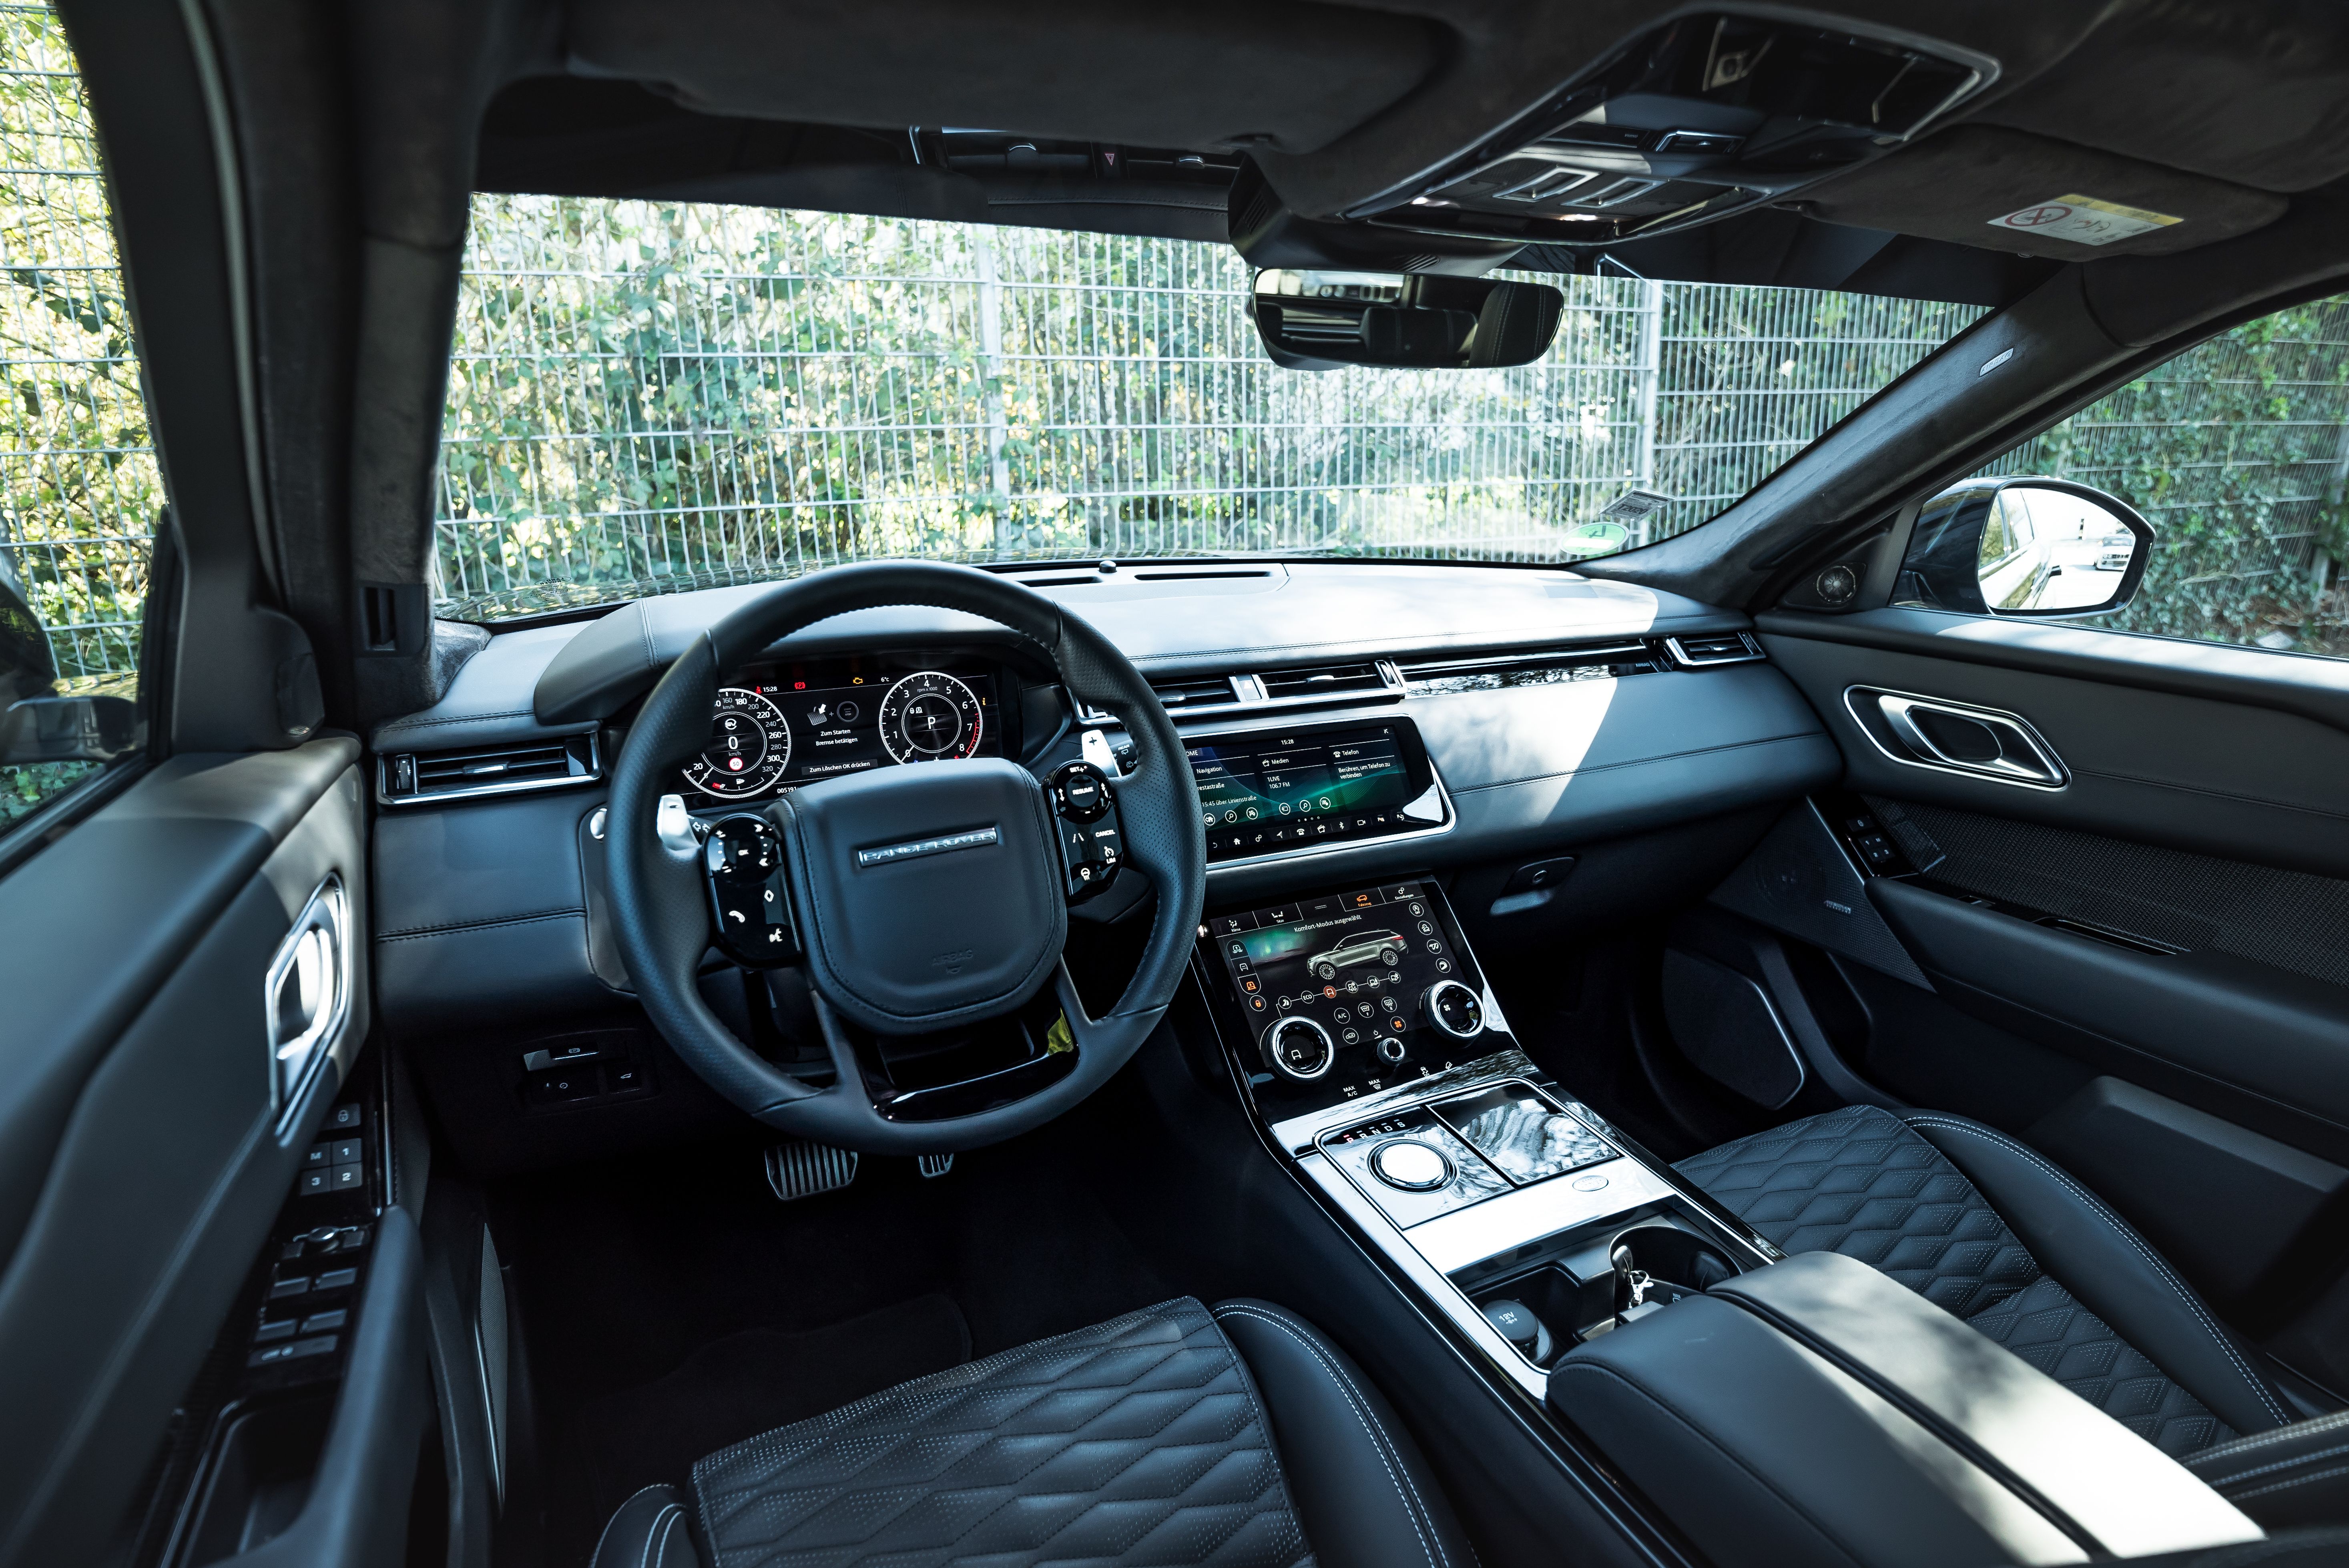 2020 Range Rover SVAutobiography Dynamic Edition SV600 By Manhart Performance